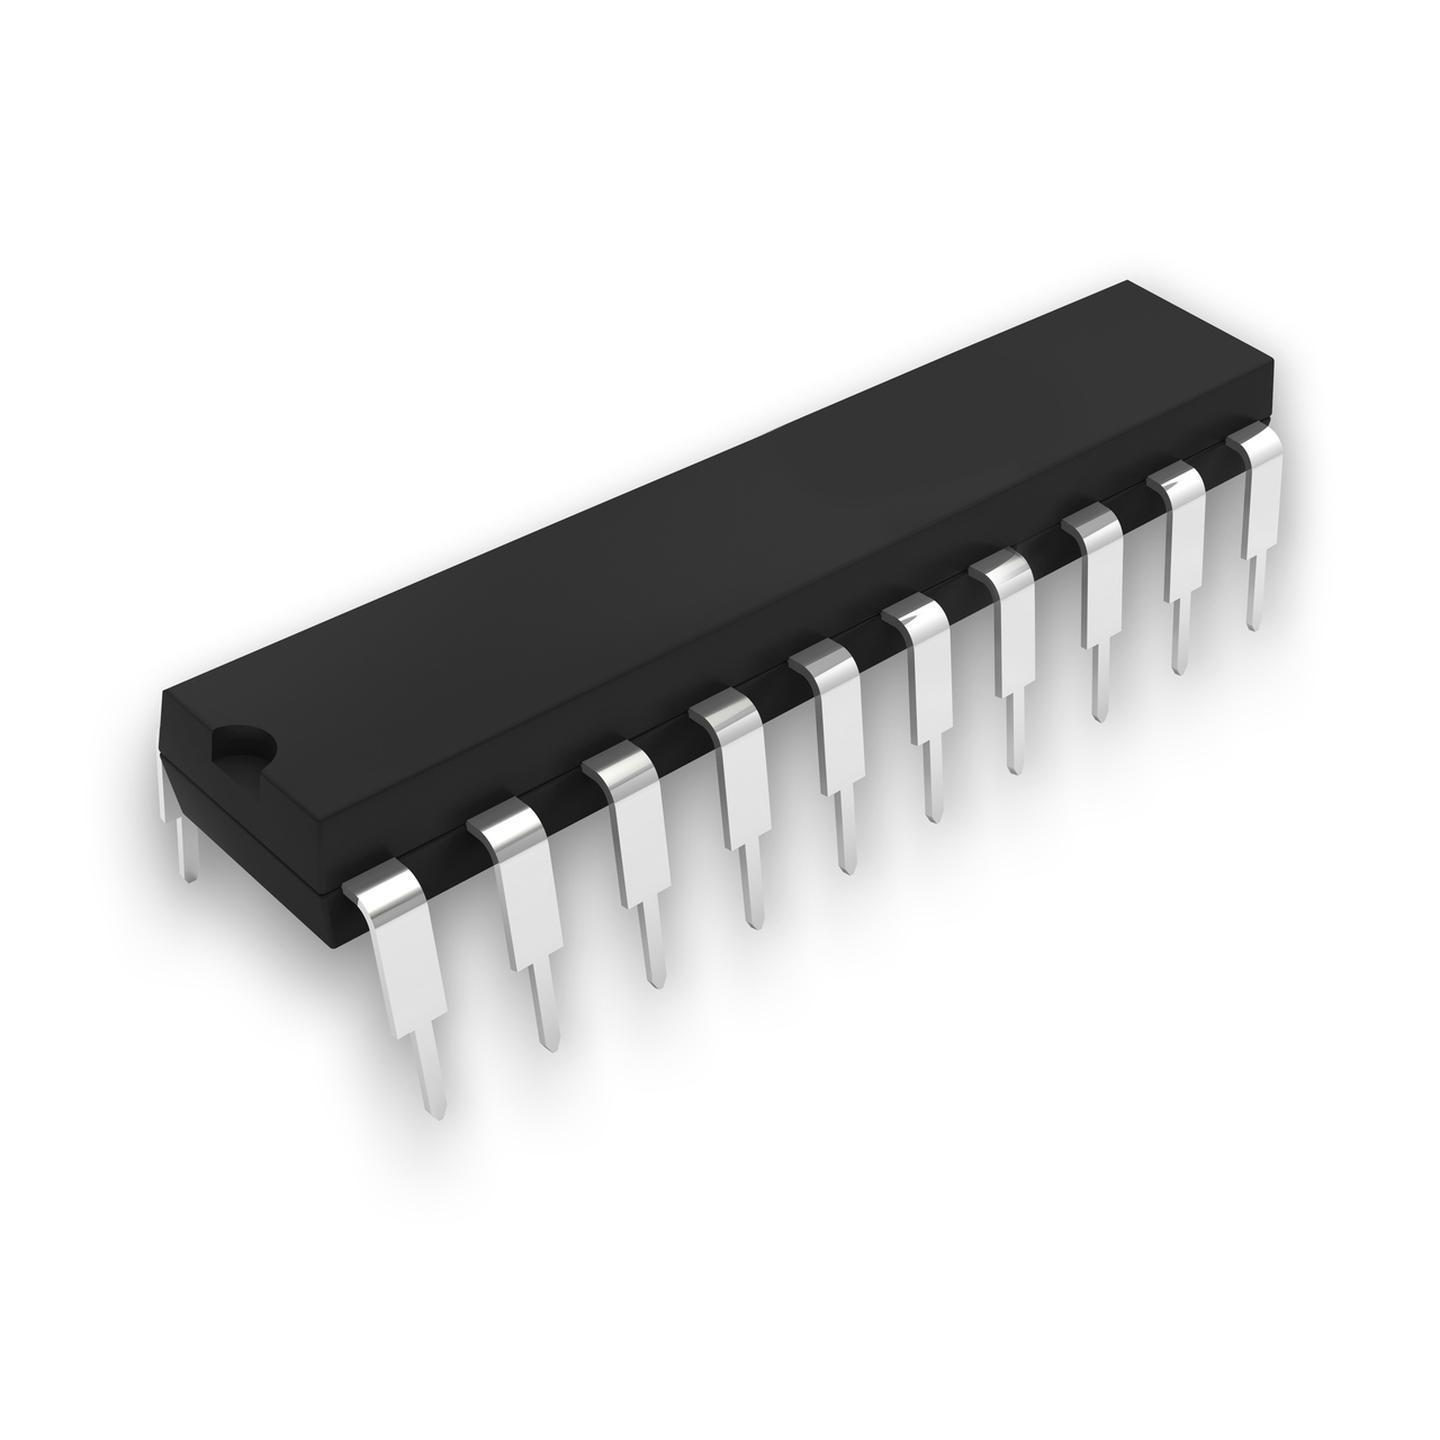 AT89C2051-24-PC 8-Bit Microcontroller IC